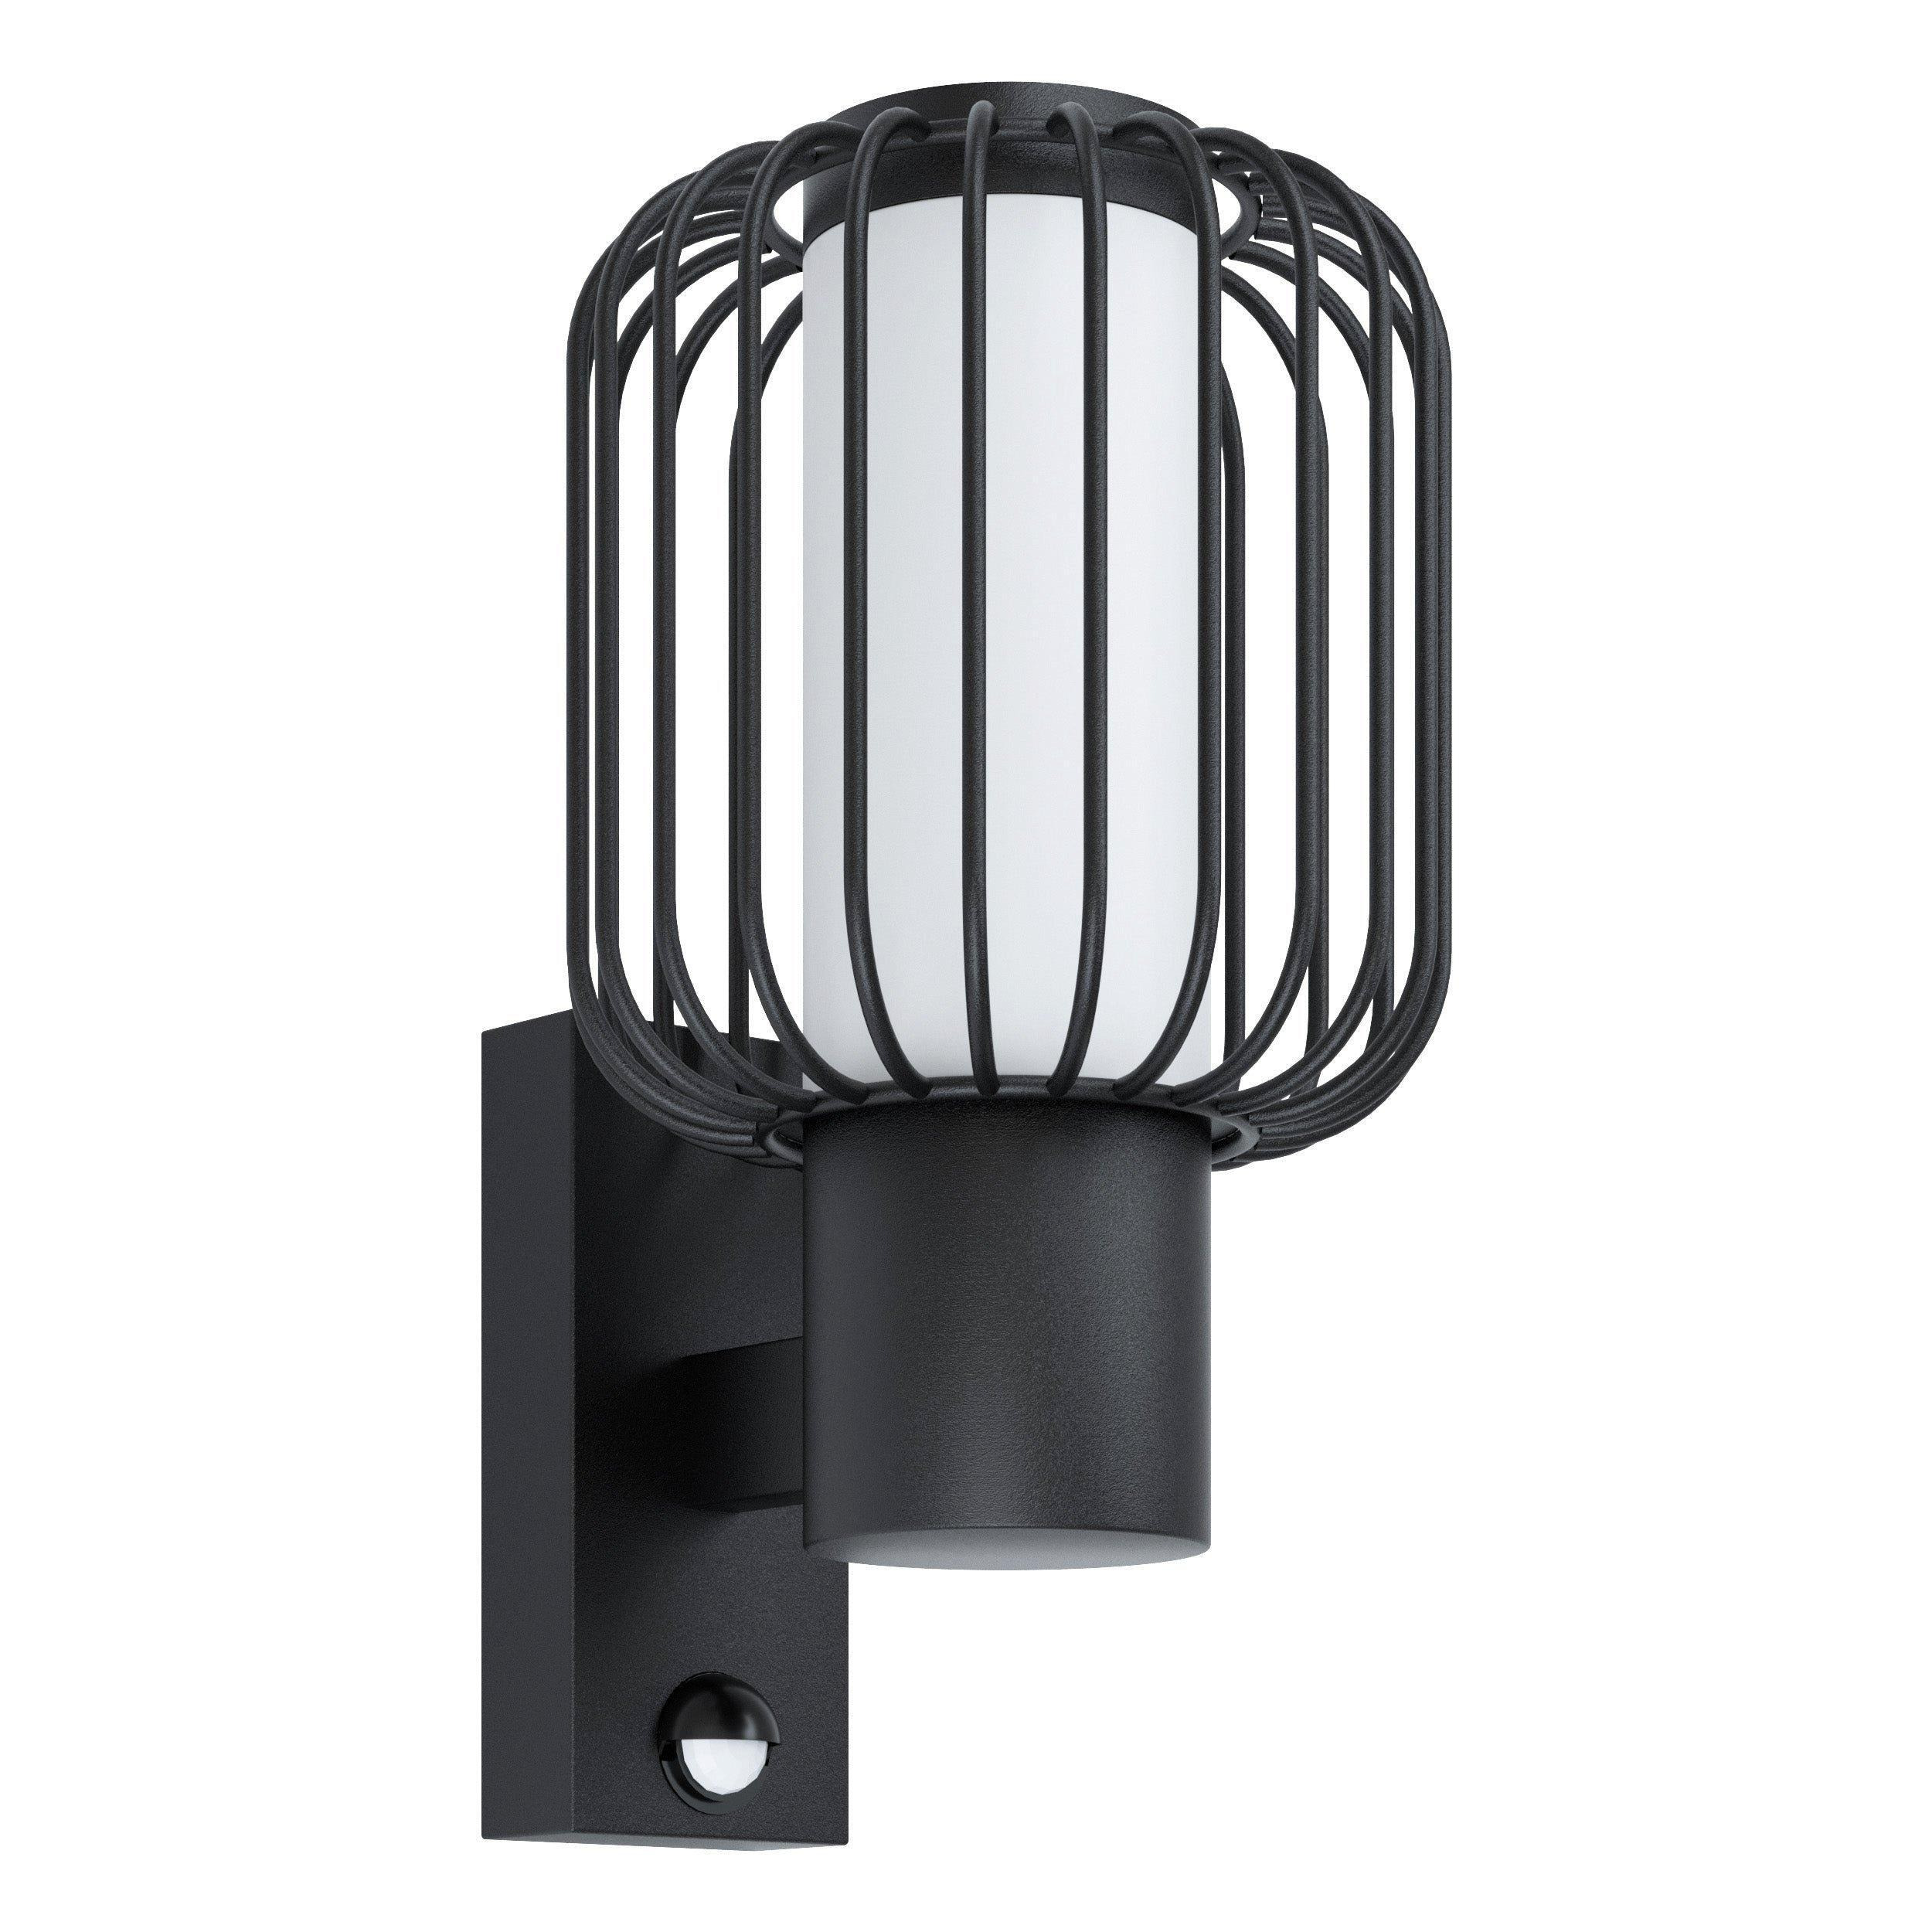 IP44 Outdoor Wall Light & PIR Sensor Black Zinc Steel 1 x 28W E27 Bulb - image 1